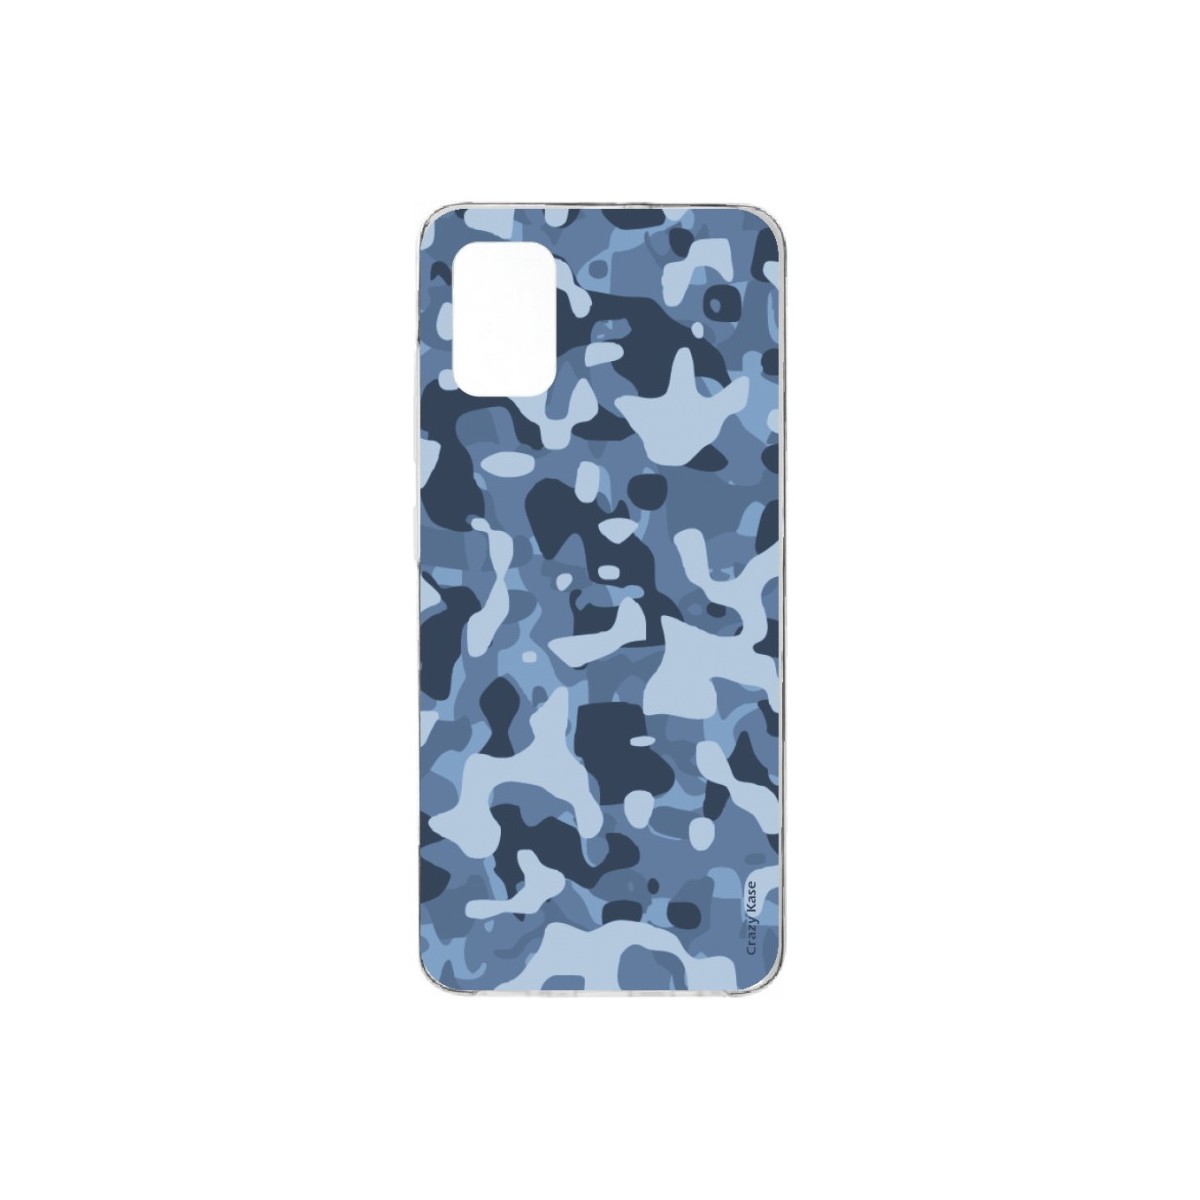 Coque Samsung Galaxy A51 souple Camouflage militaire bleu Crazy Kase